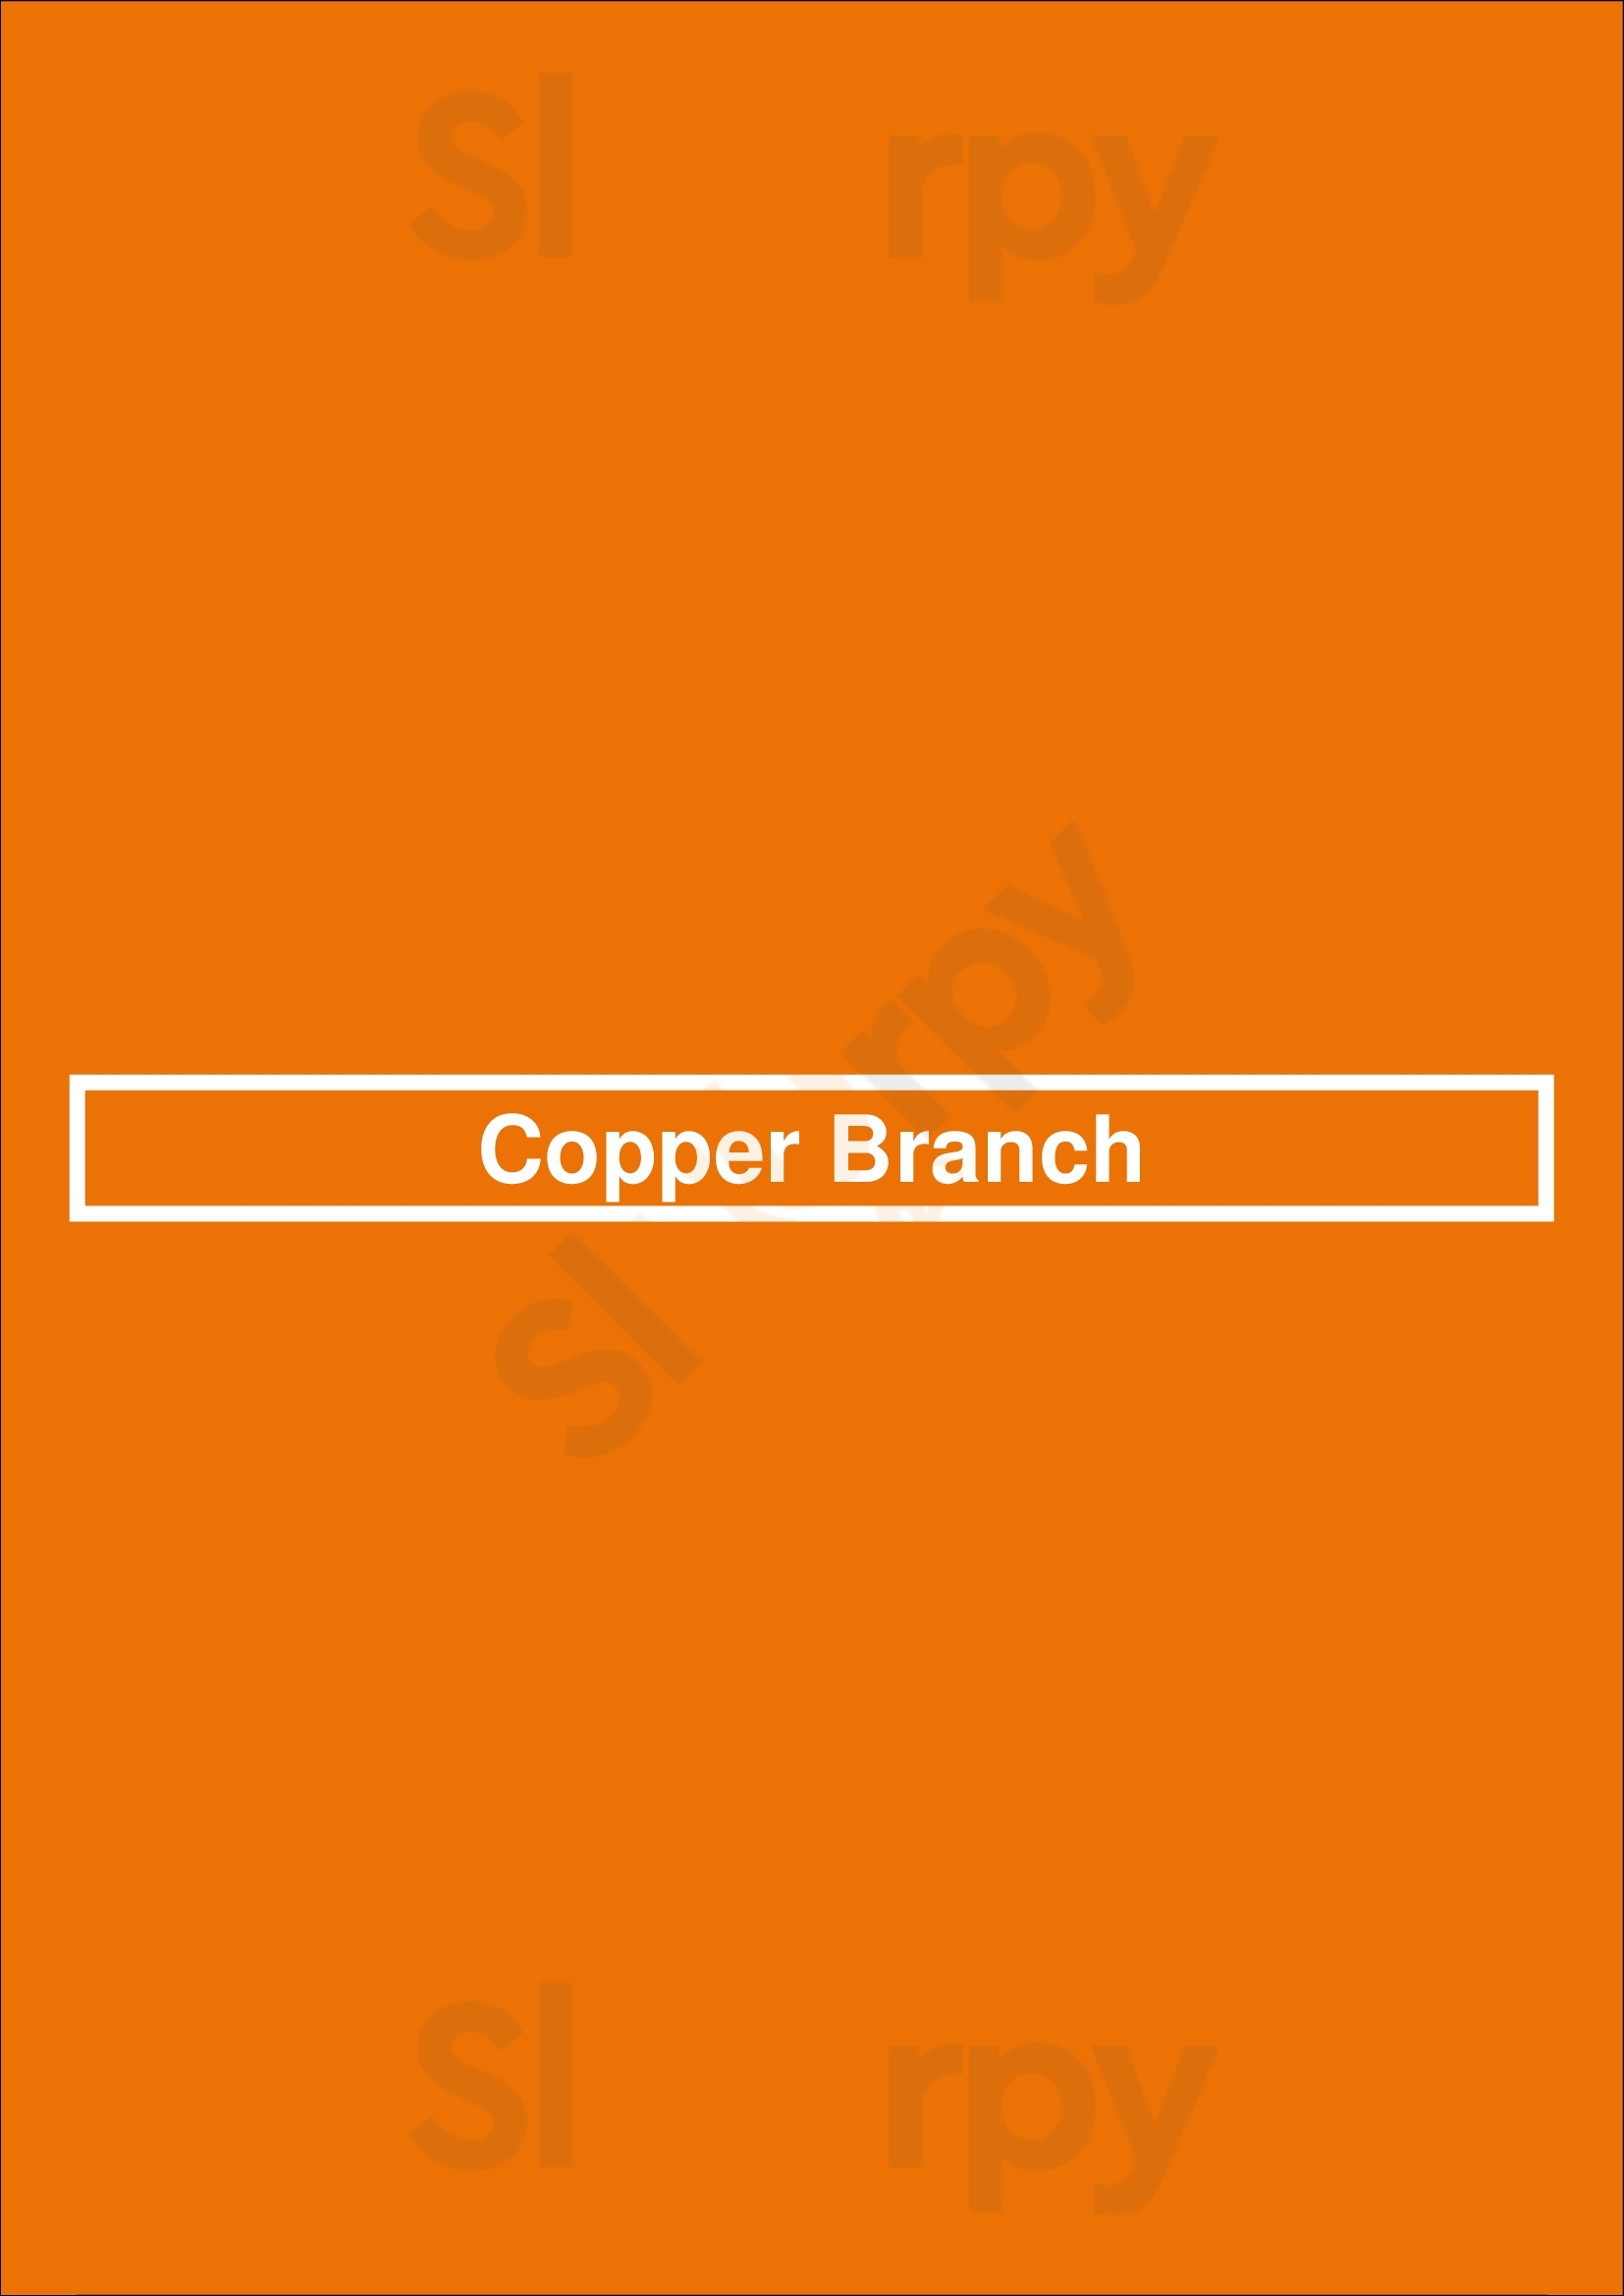 Copper Branch Waterloo Menu - 1